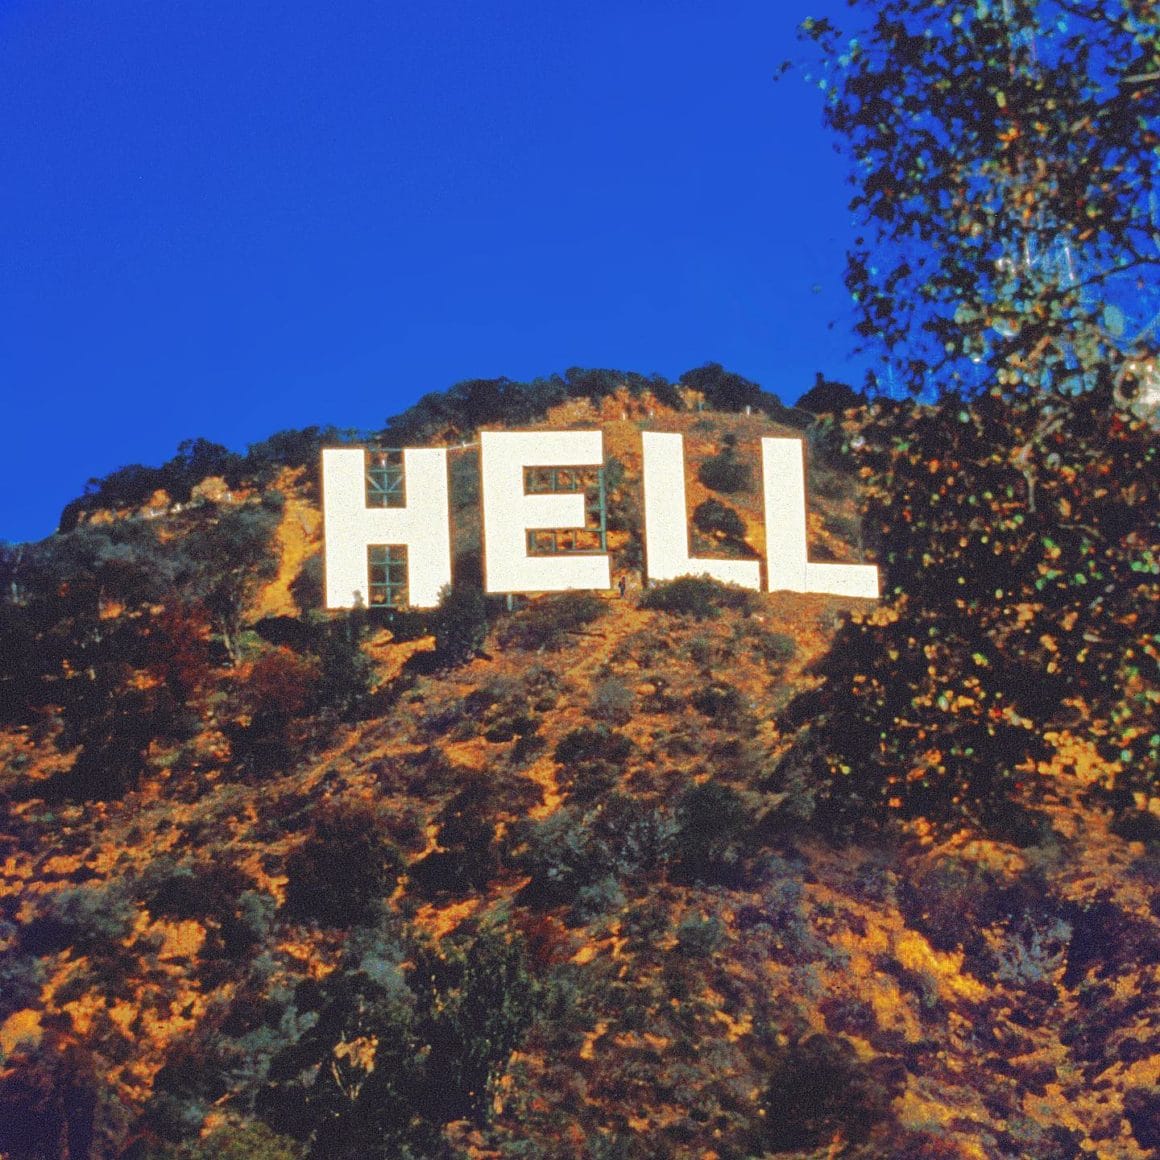 Montage du signe Hollywood formant le mot "hell" traduisez par enfer 